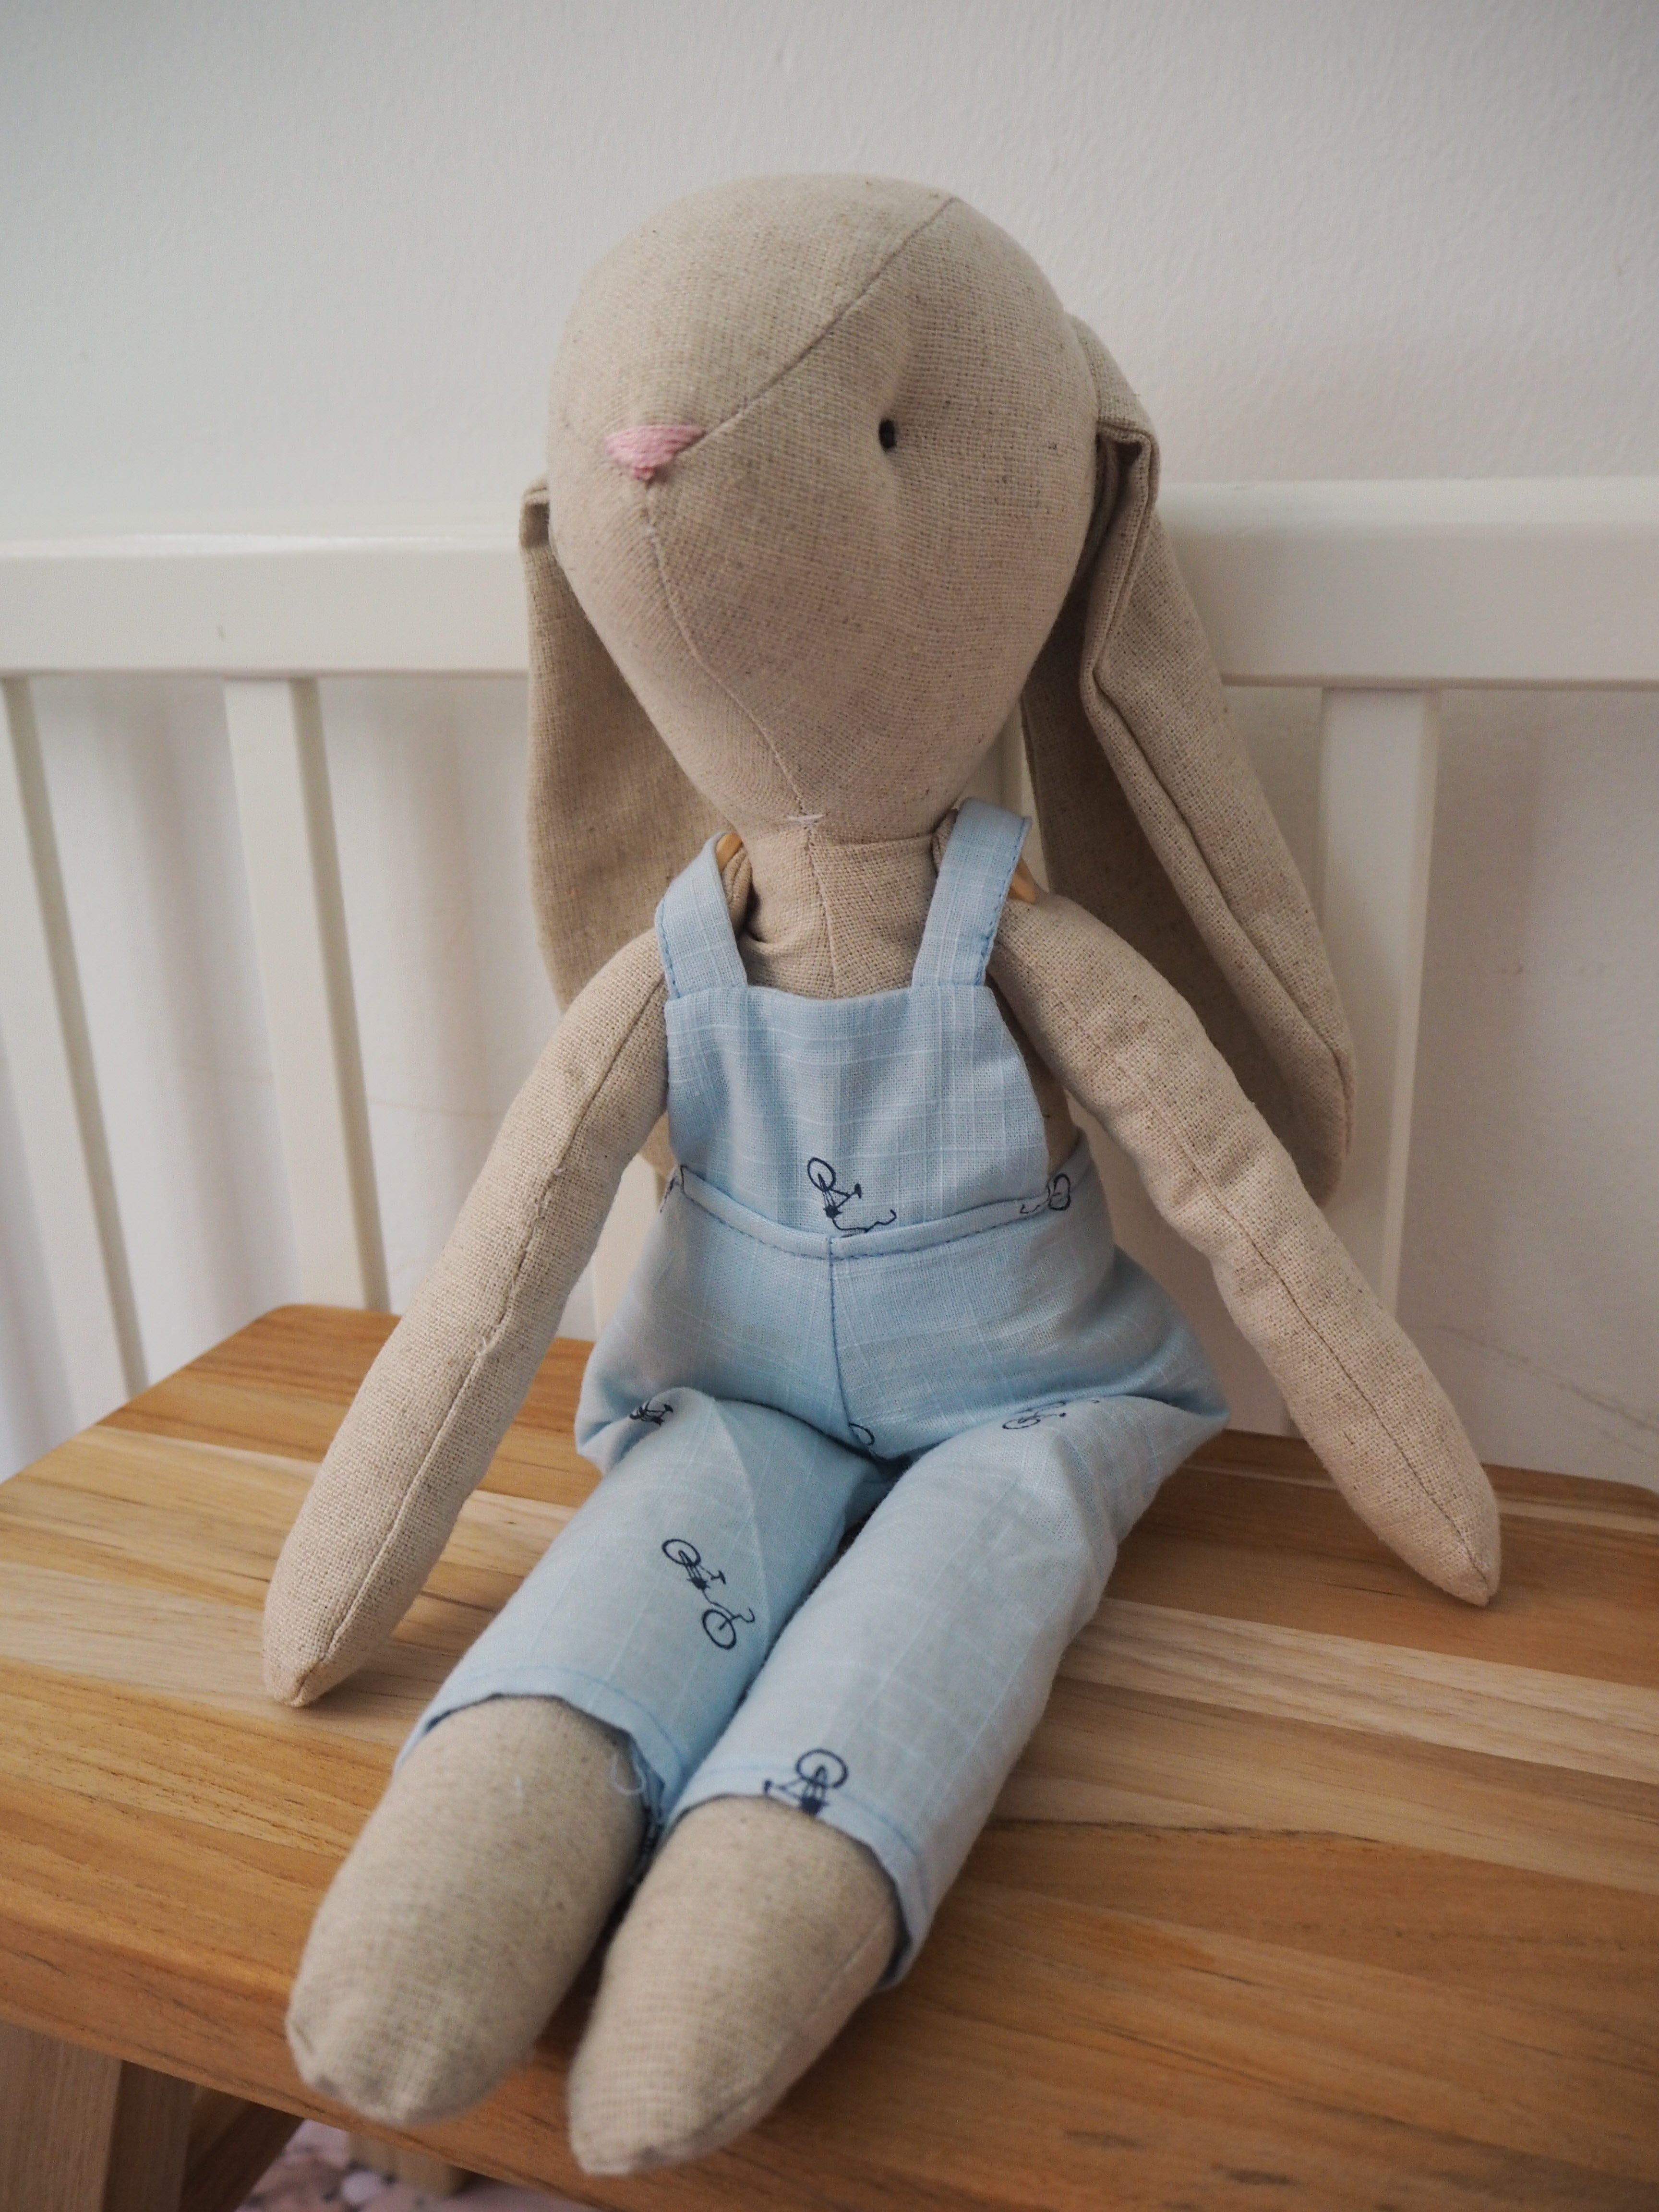 Peter Rabbit - Plush Doll